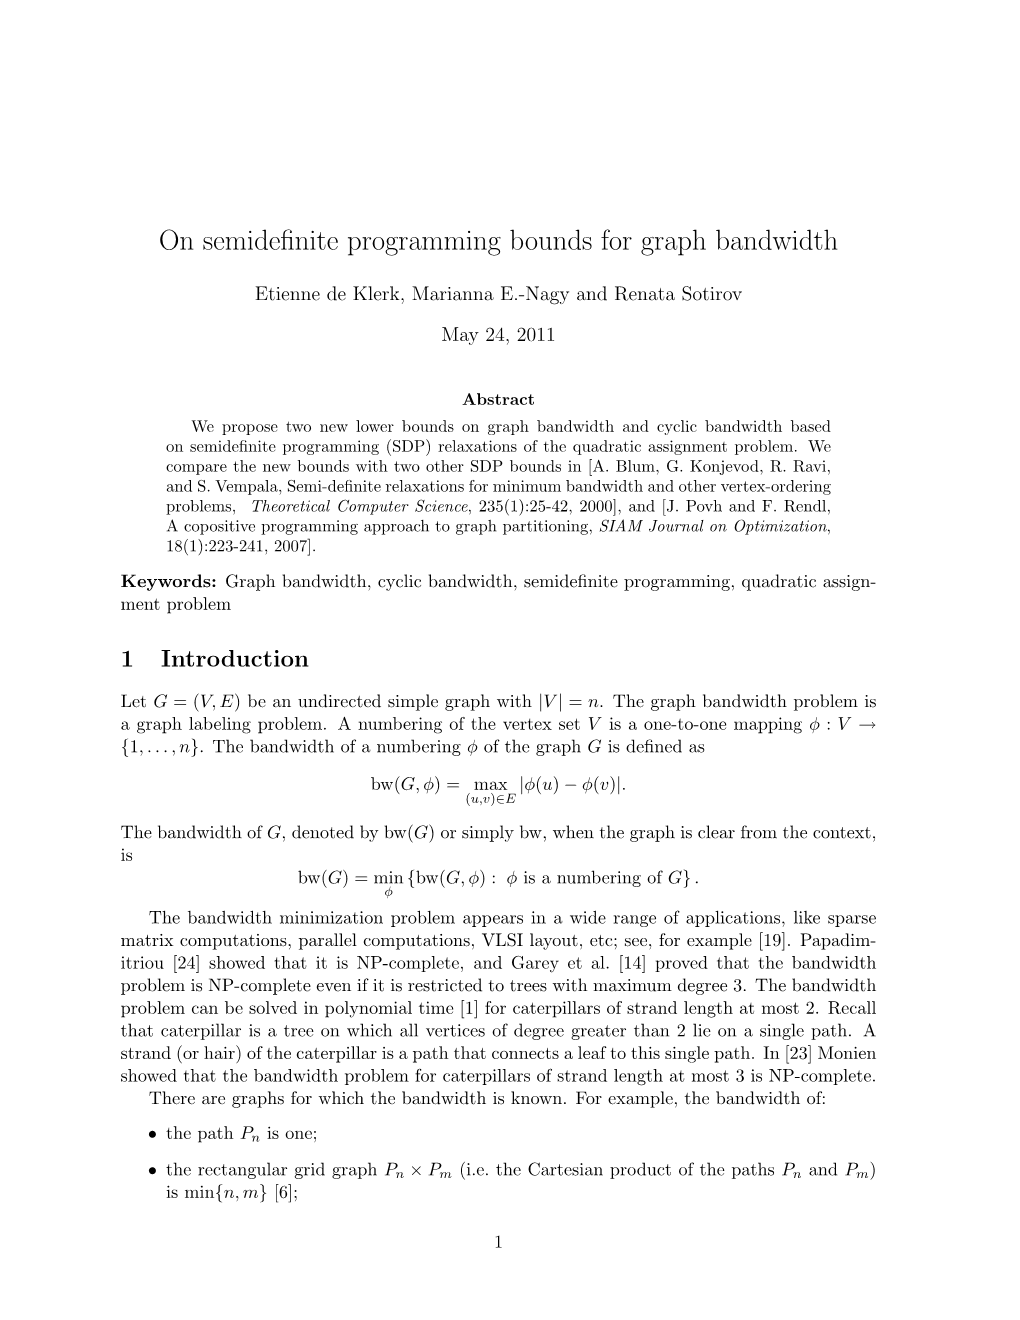 On Semidefinite Programming Bounds for Graph Bandwidth